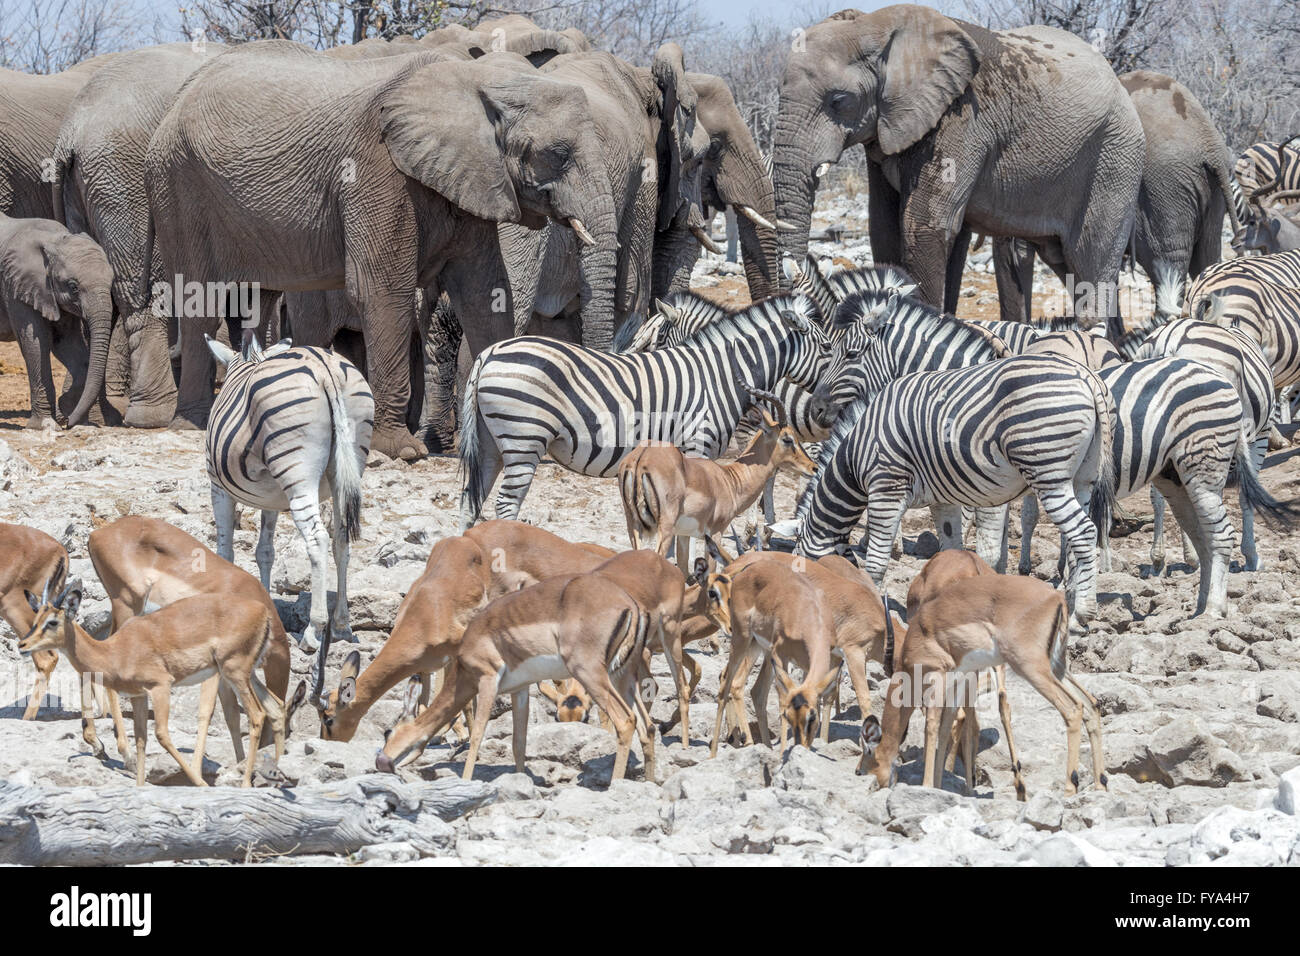 Escenas alrededor de abrevadero, elefantes, cebra de las llanuras, raza de Burchell, impala de cara negra, Parque Nacional de Etosha, Namibia Foto de stock